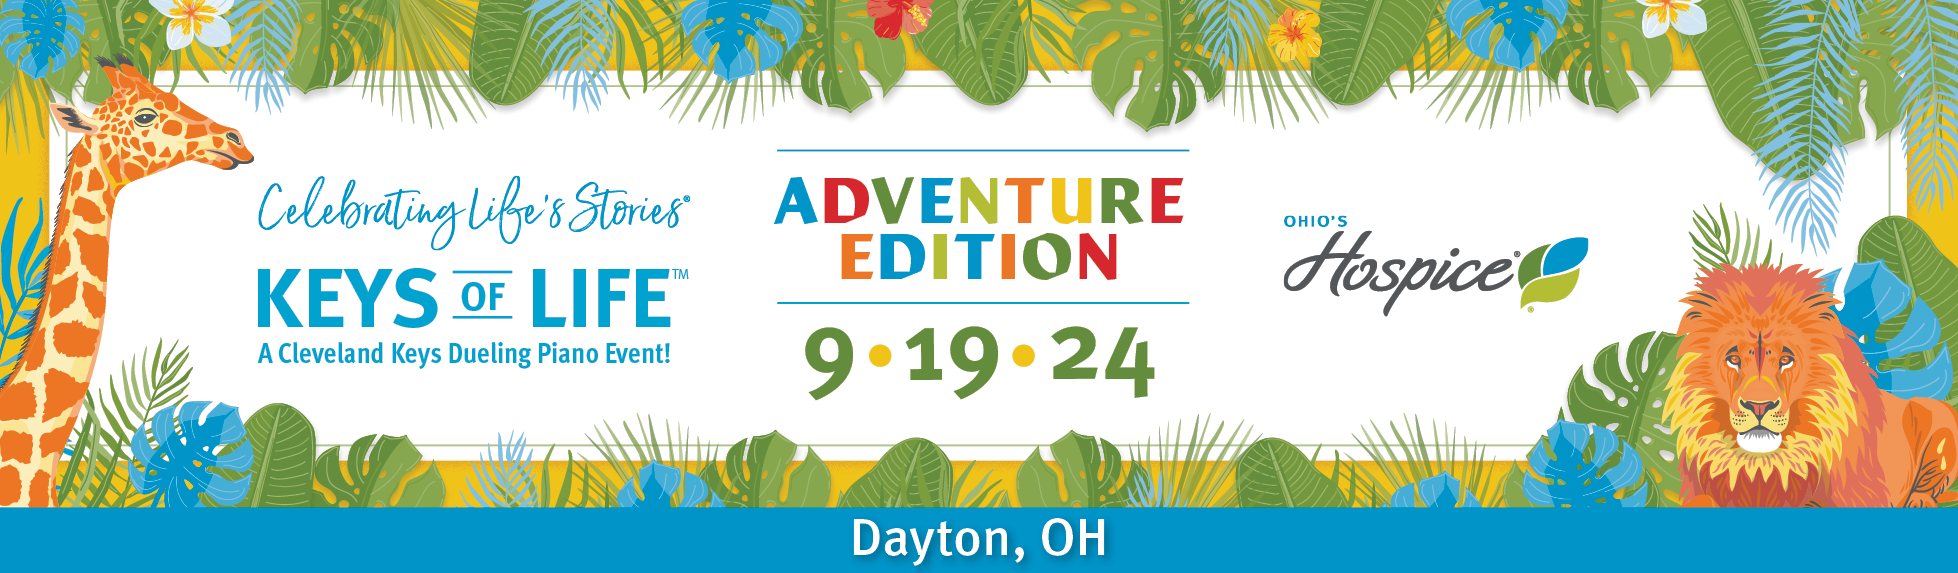 Ohio's Hospice of Dayton 2024 Keys of Life 5.9.24 Dayton, OH